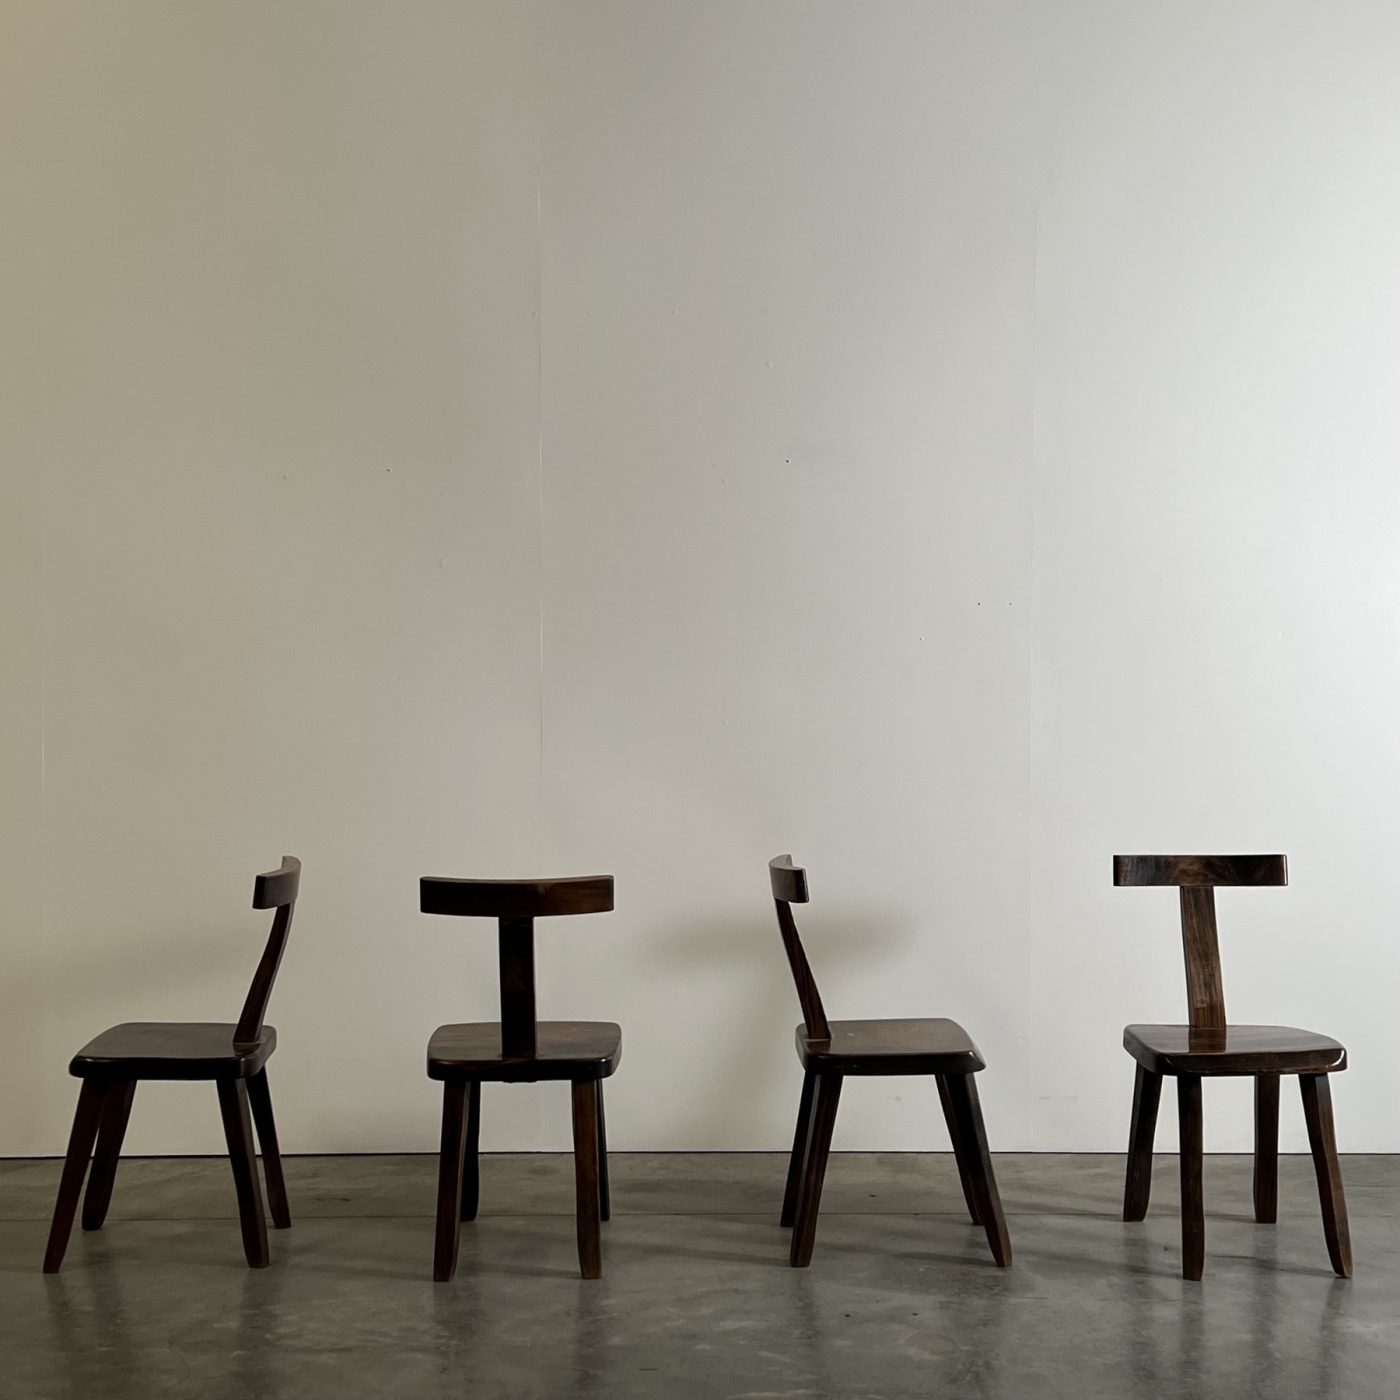 objet-hanninen-chairs0001